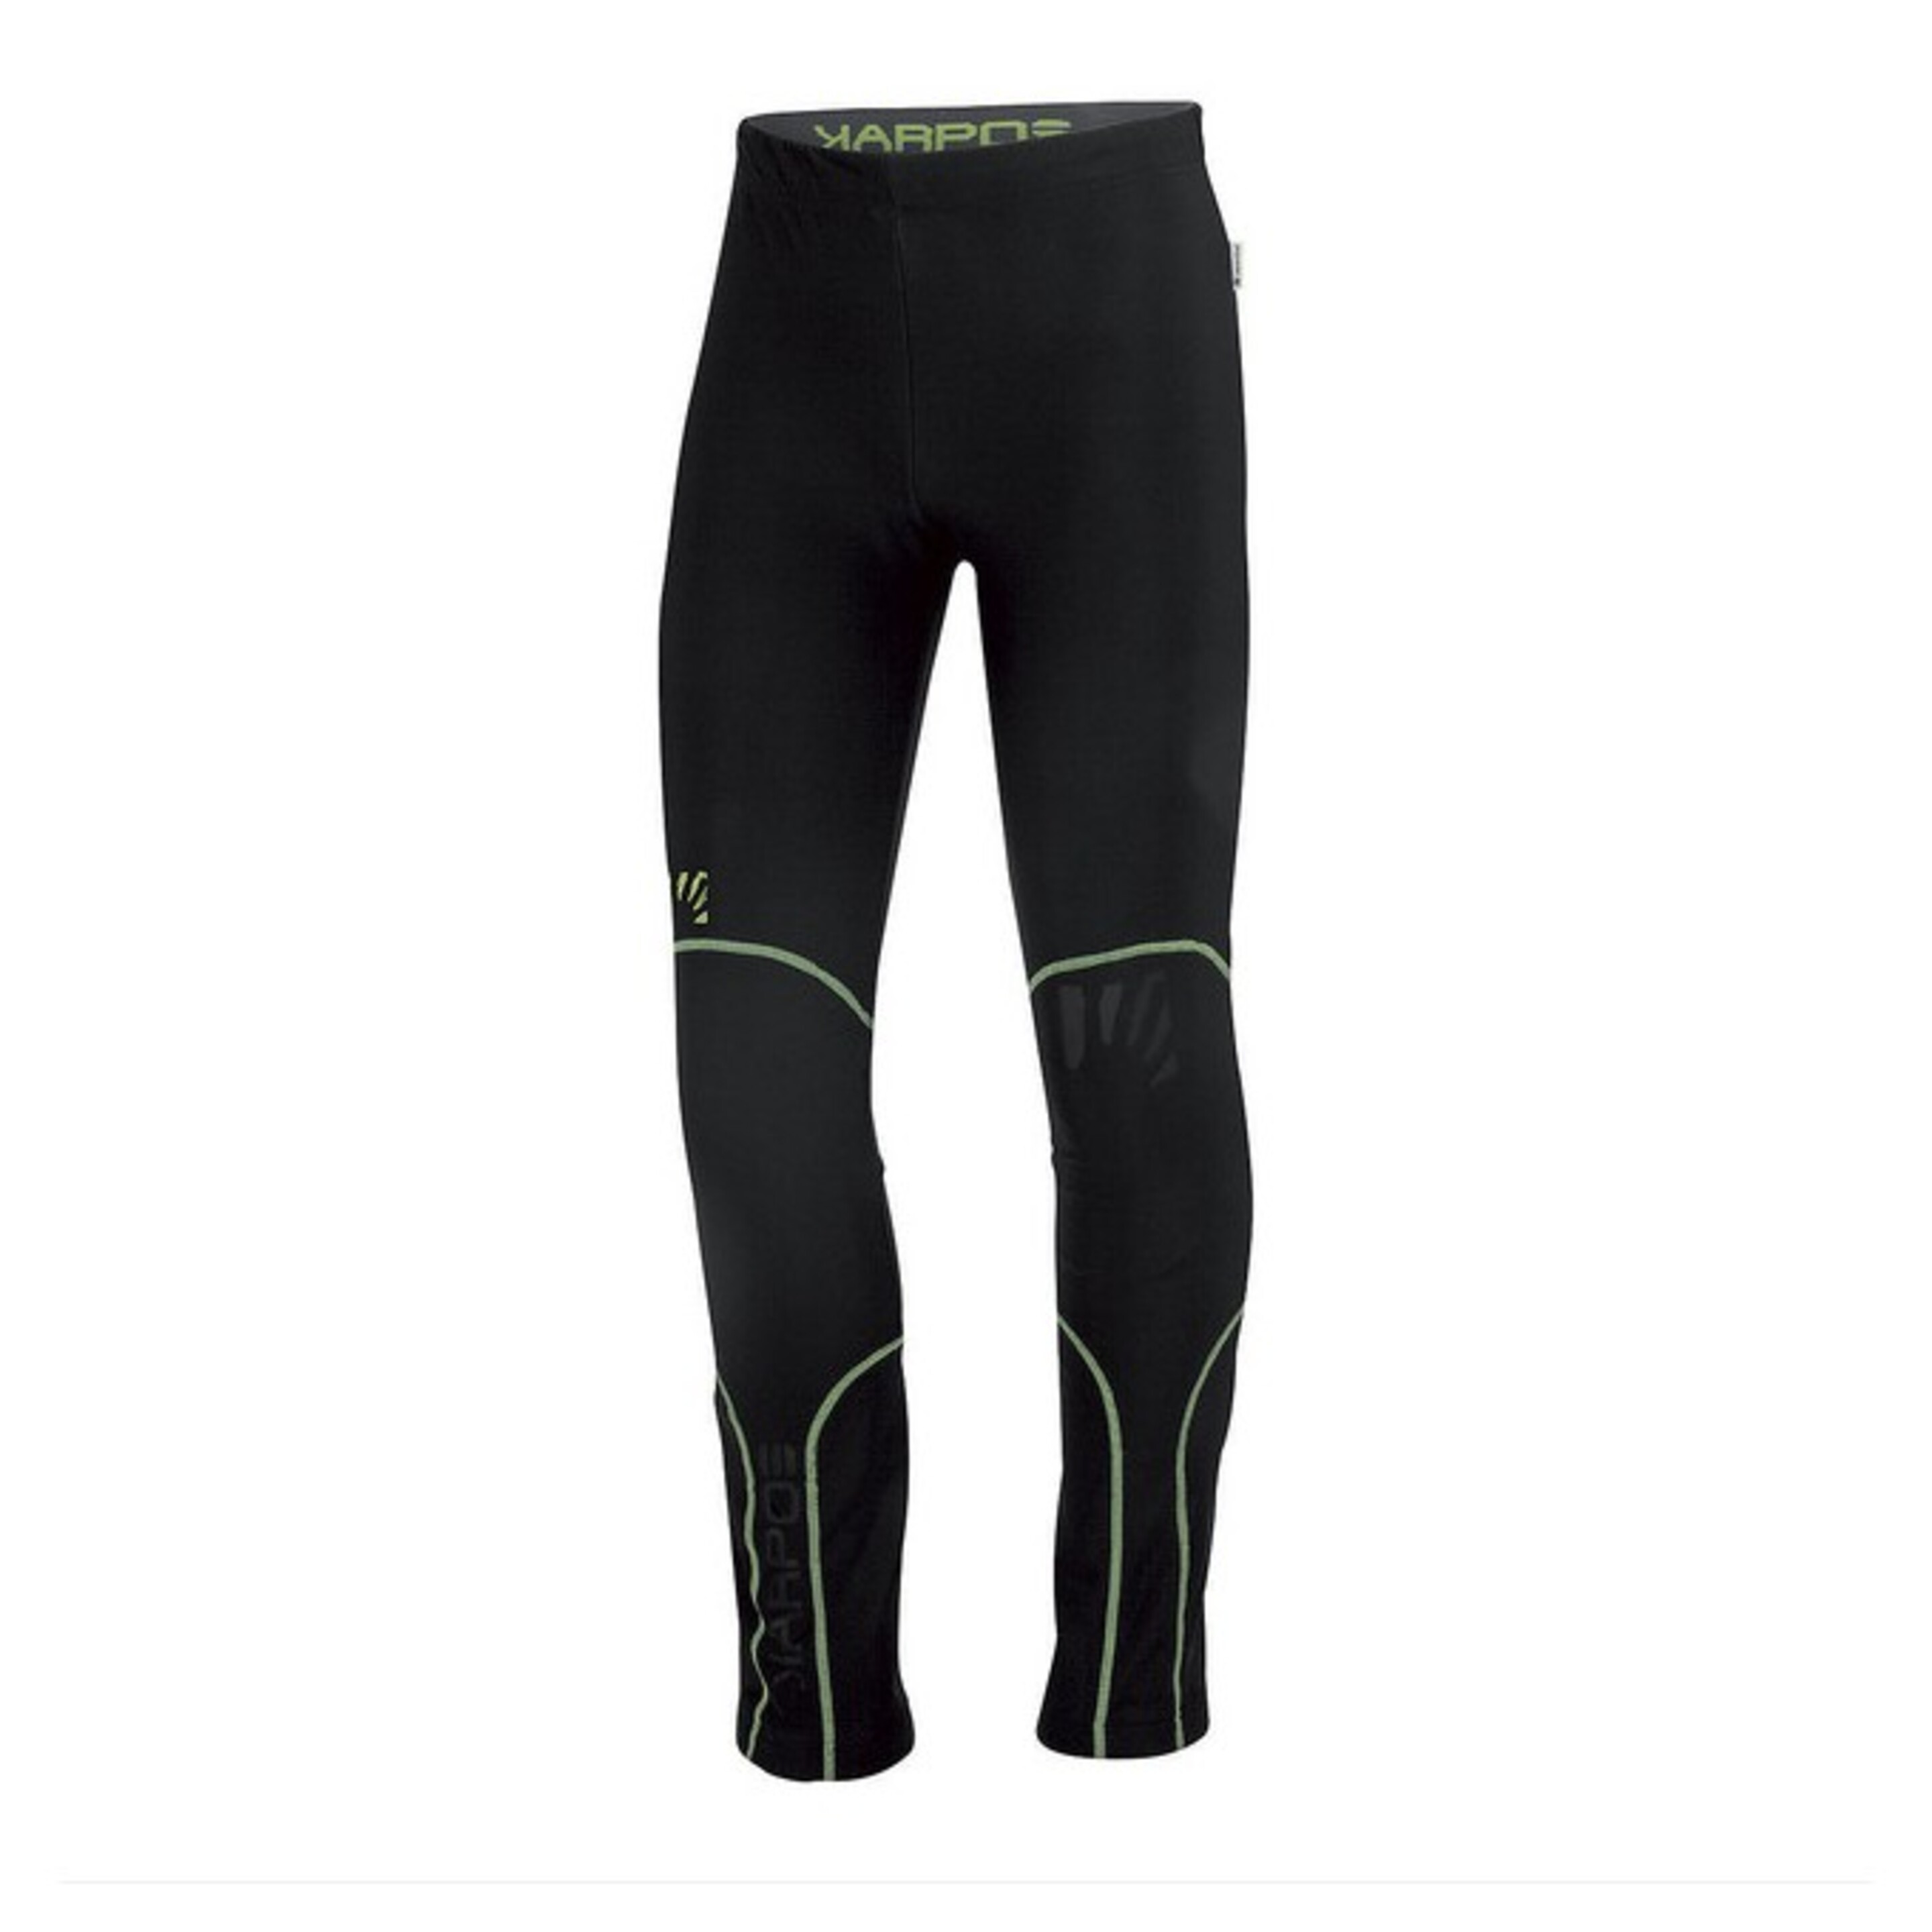 Pantalon Karpos Alagna Negro/verde Fluo